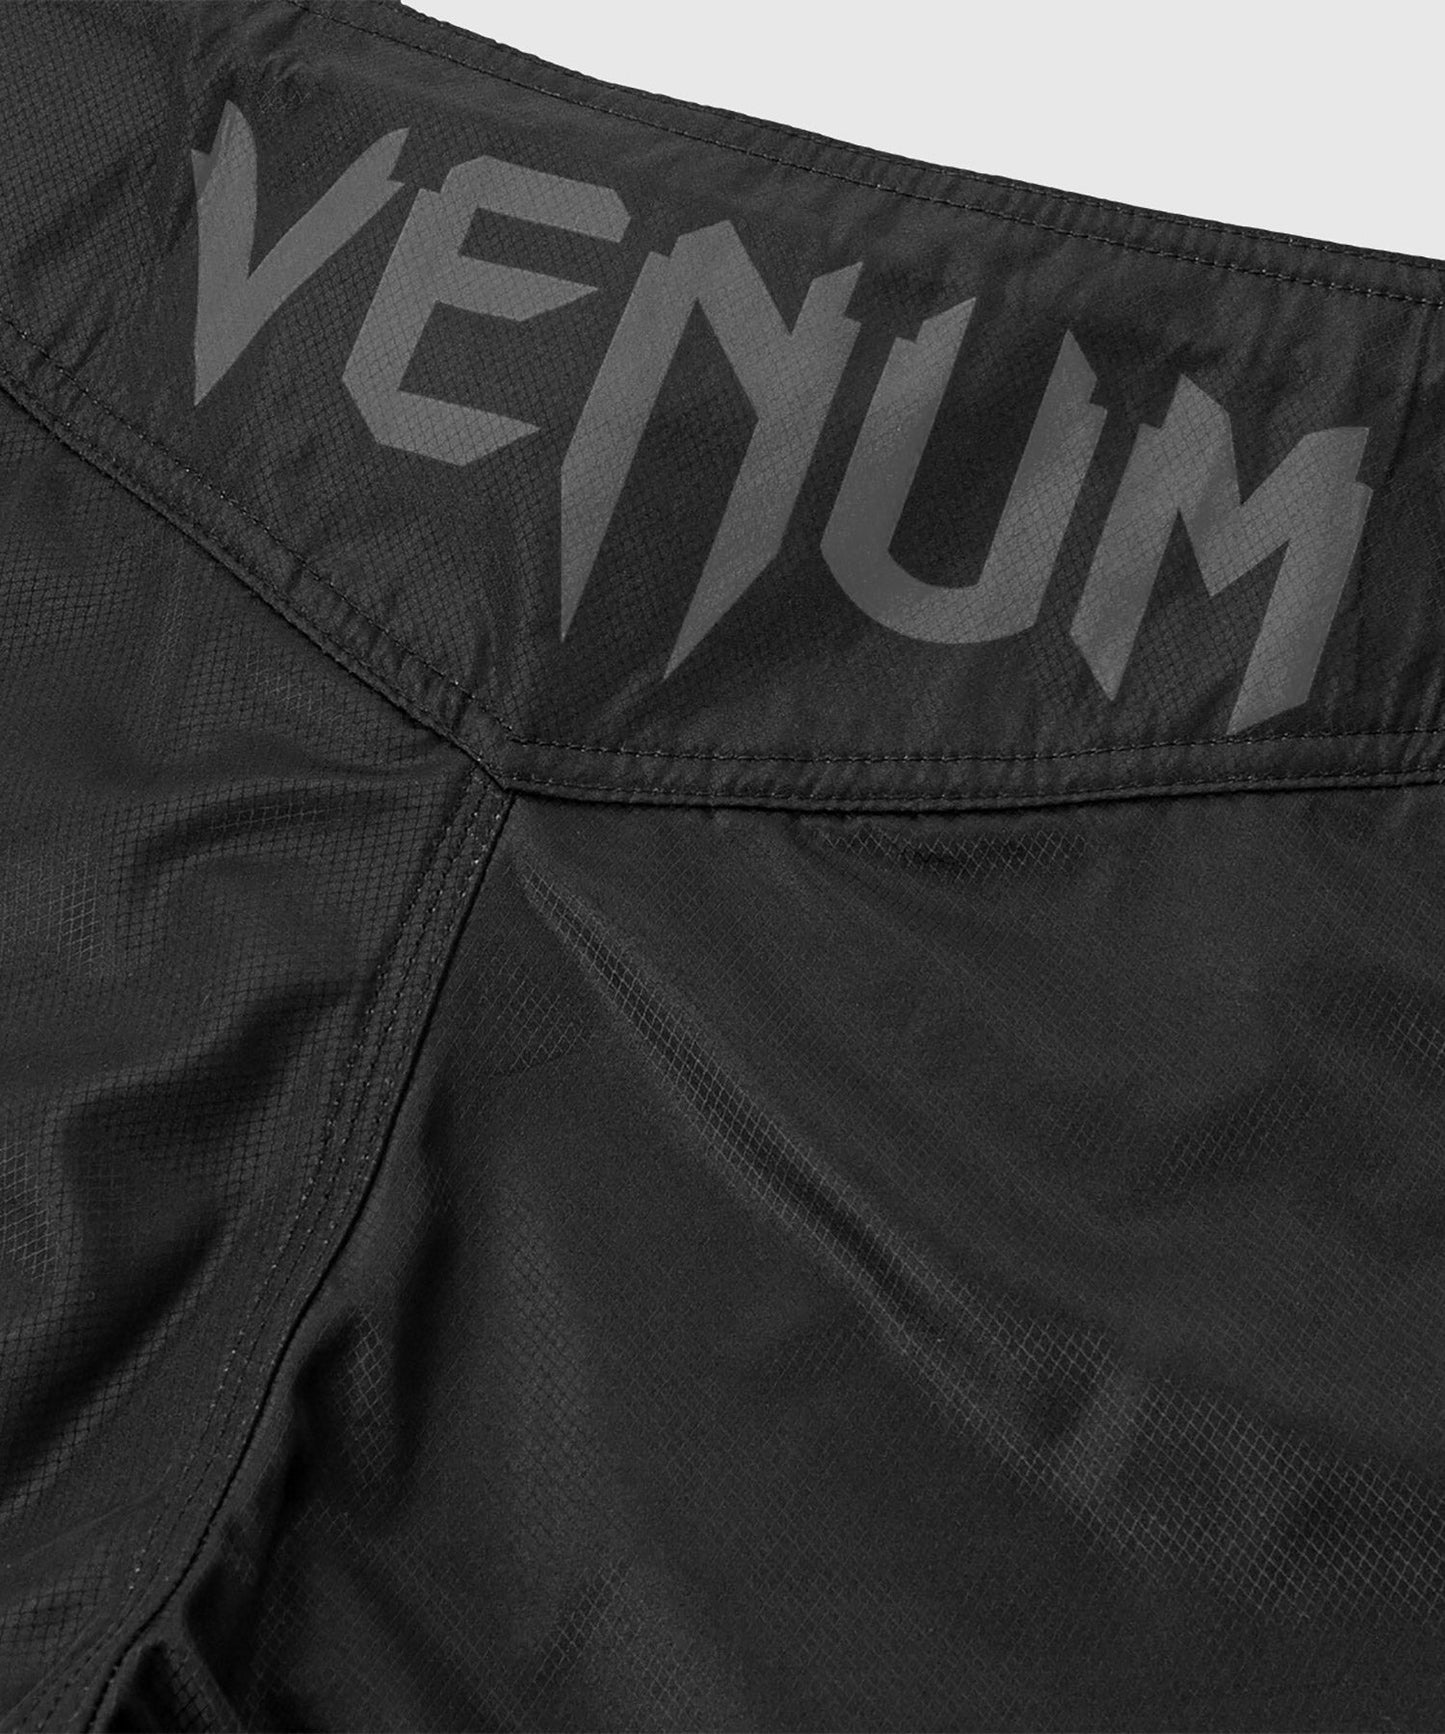 Venum Light 3.0 Fightshorts - Black/Dark camo